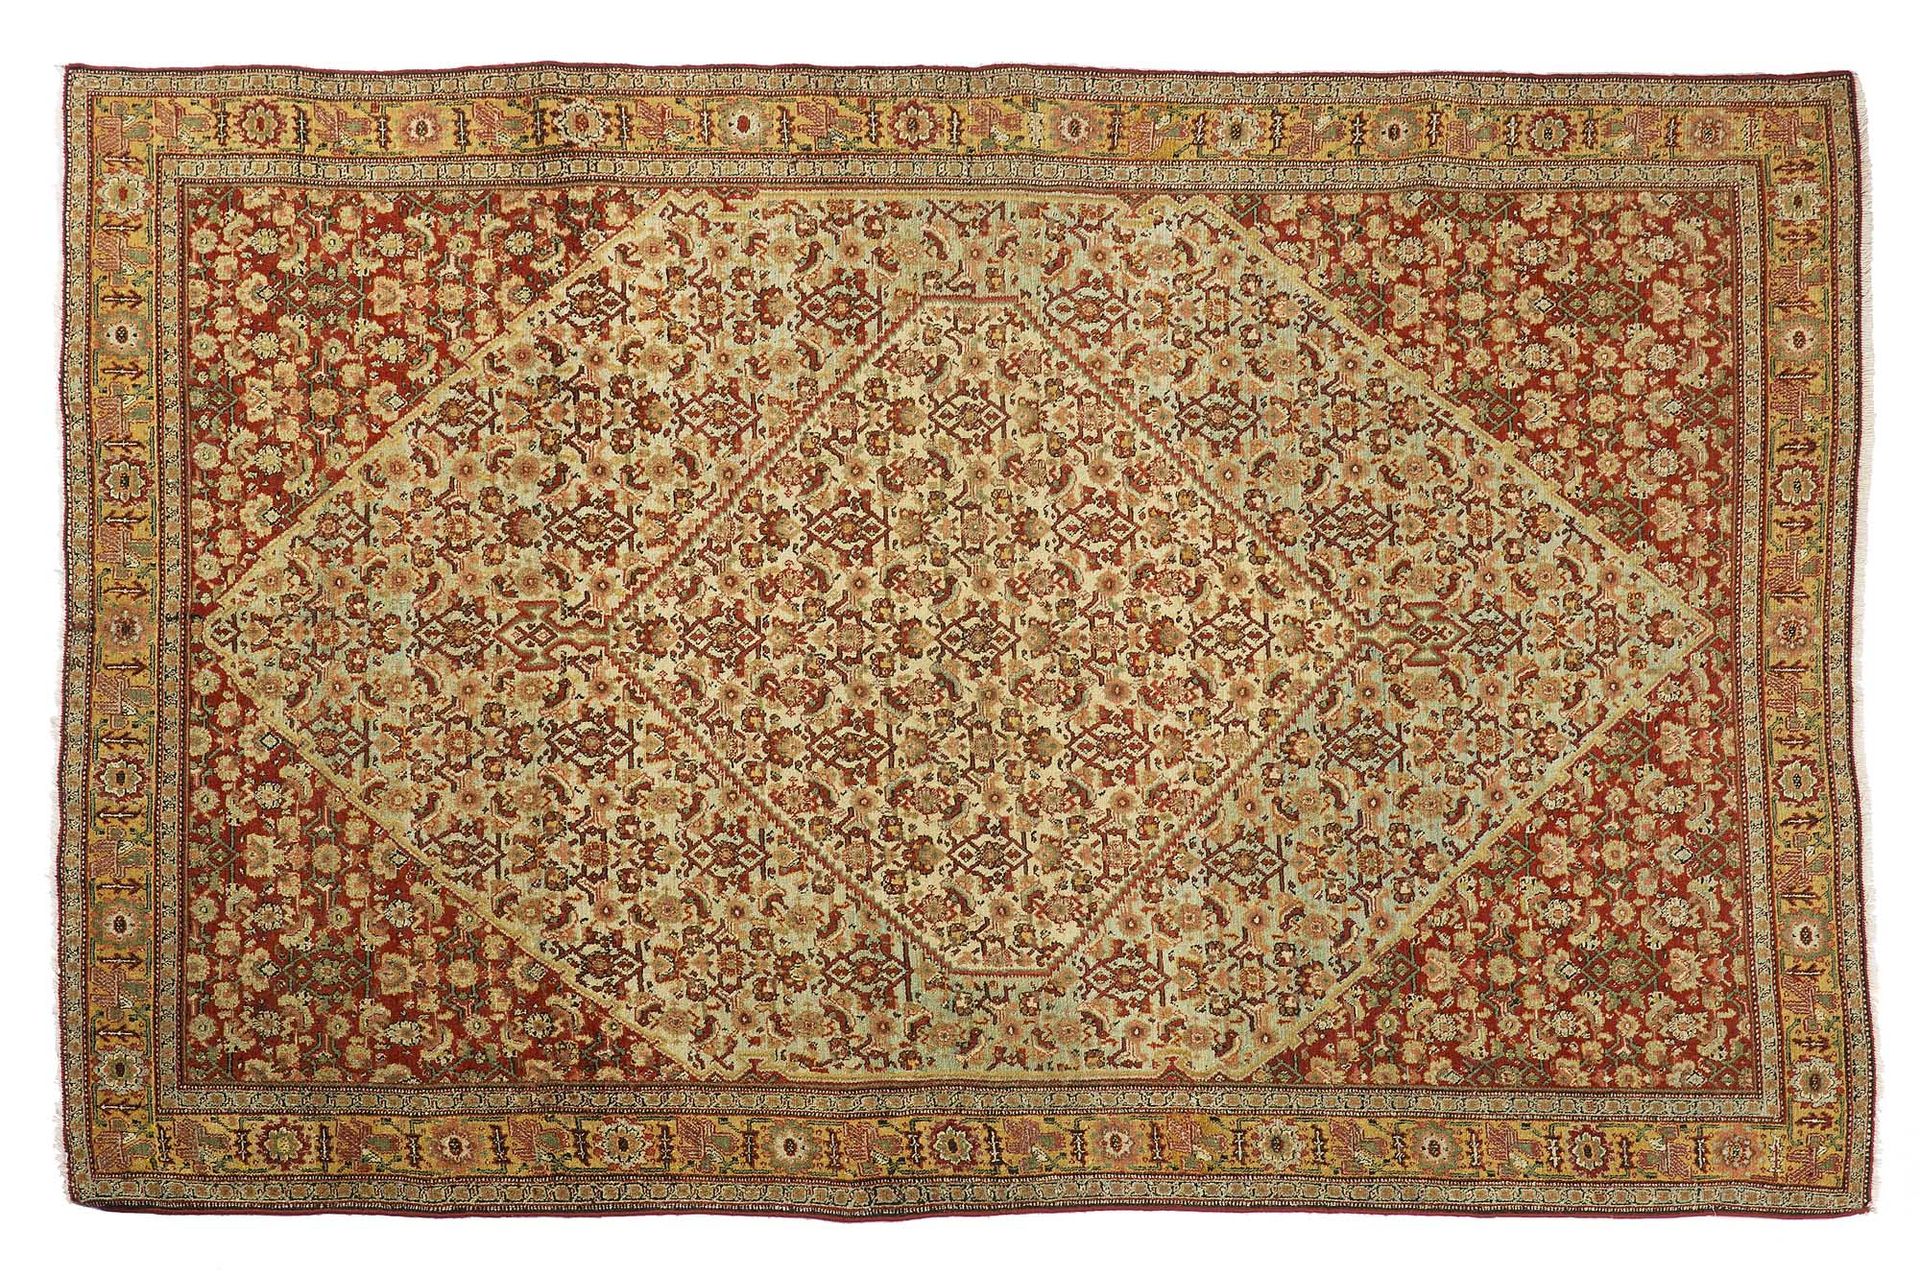 Null Fin tapis SENNEH (Perse), fin du 19e siècle

Dimensions : 196 x 128cm

Cara&hellip;